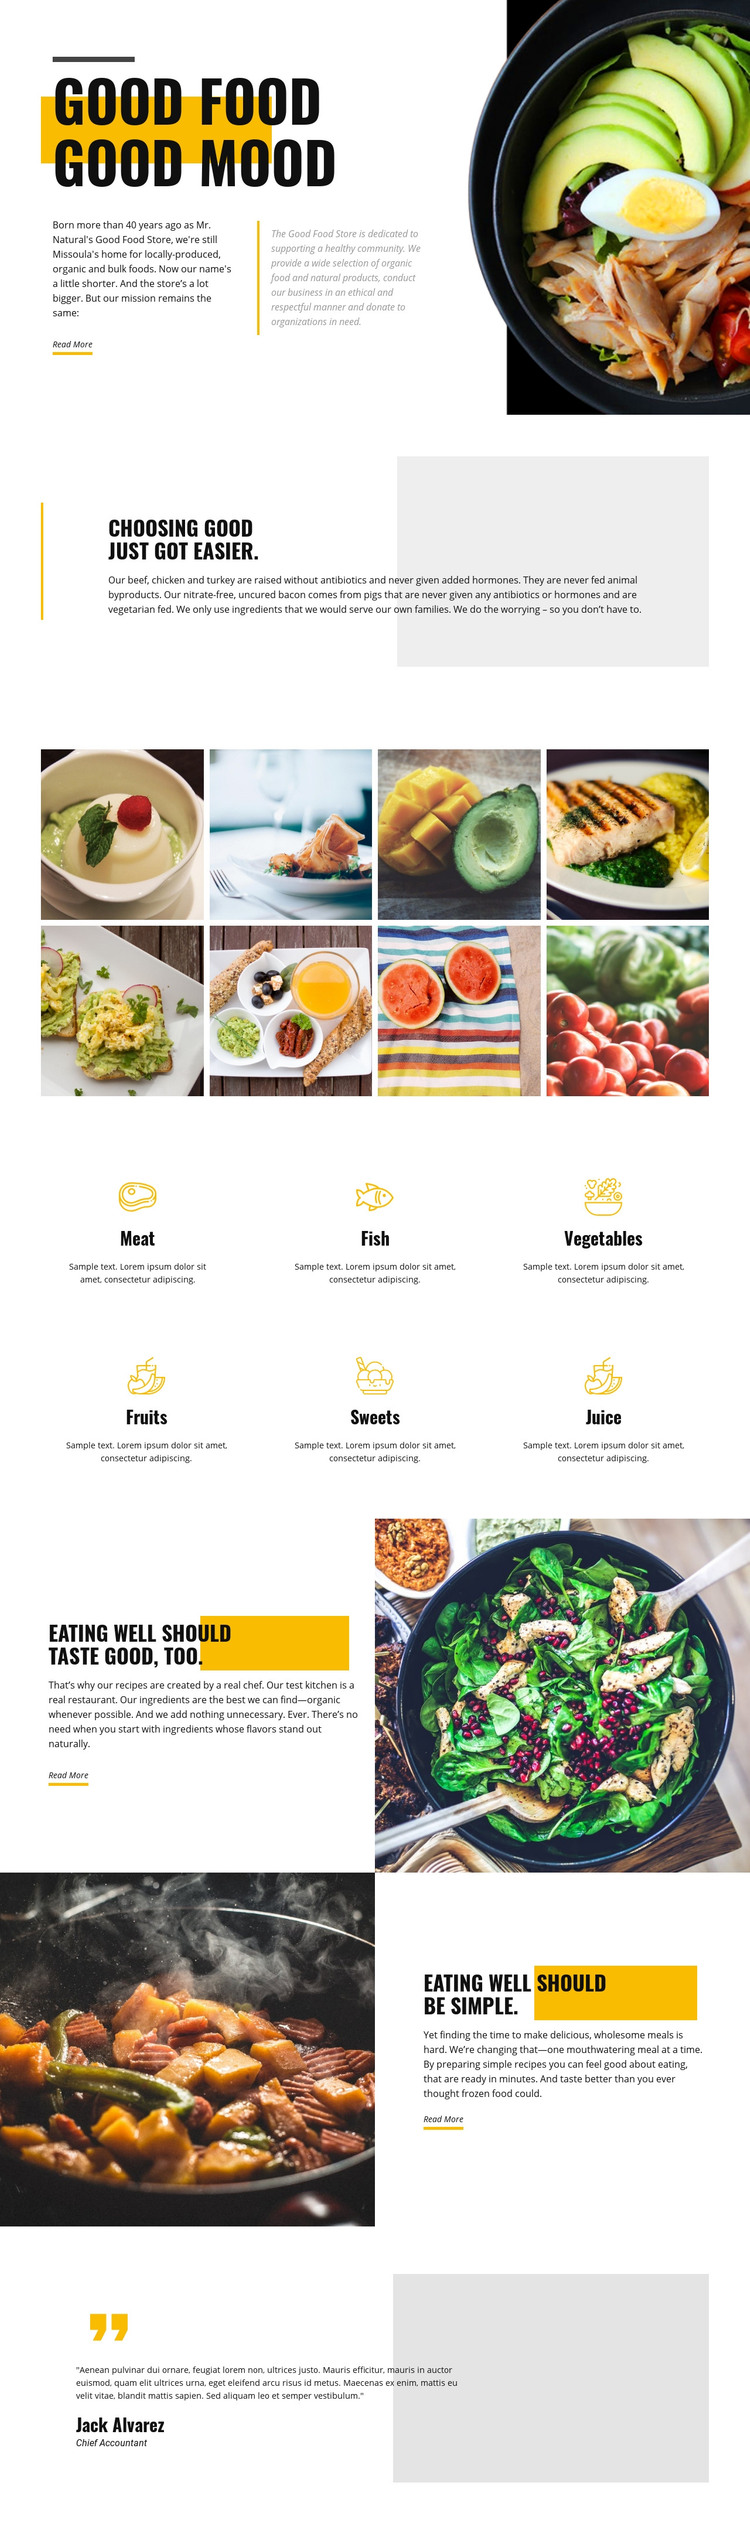 Good mood good food Homepage Design